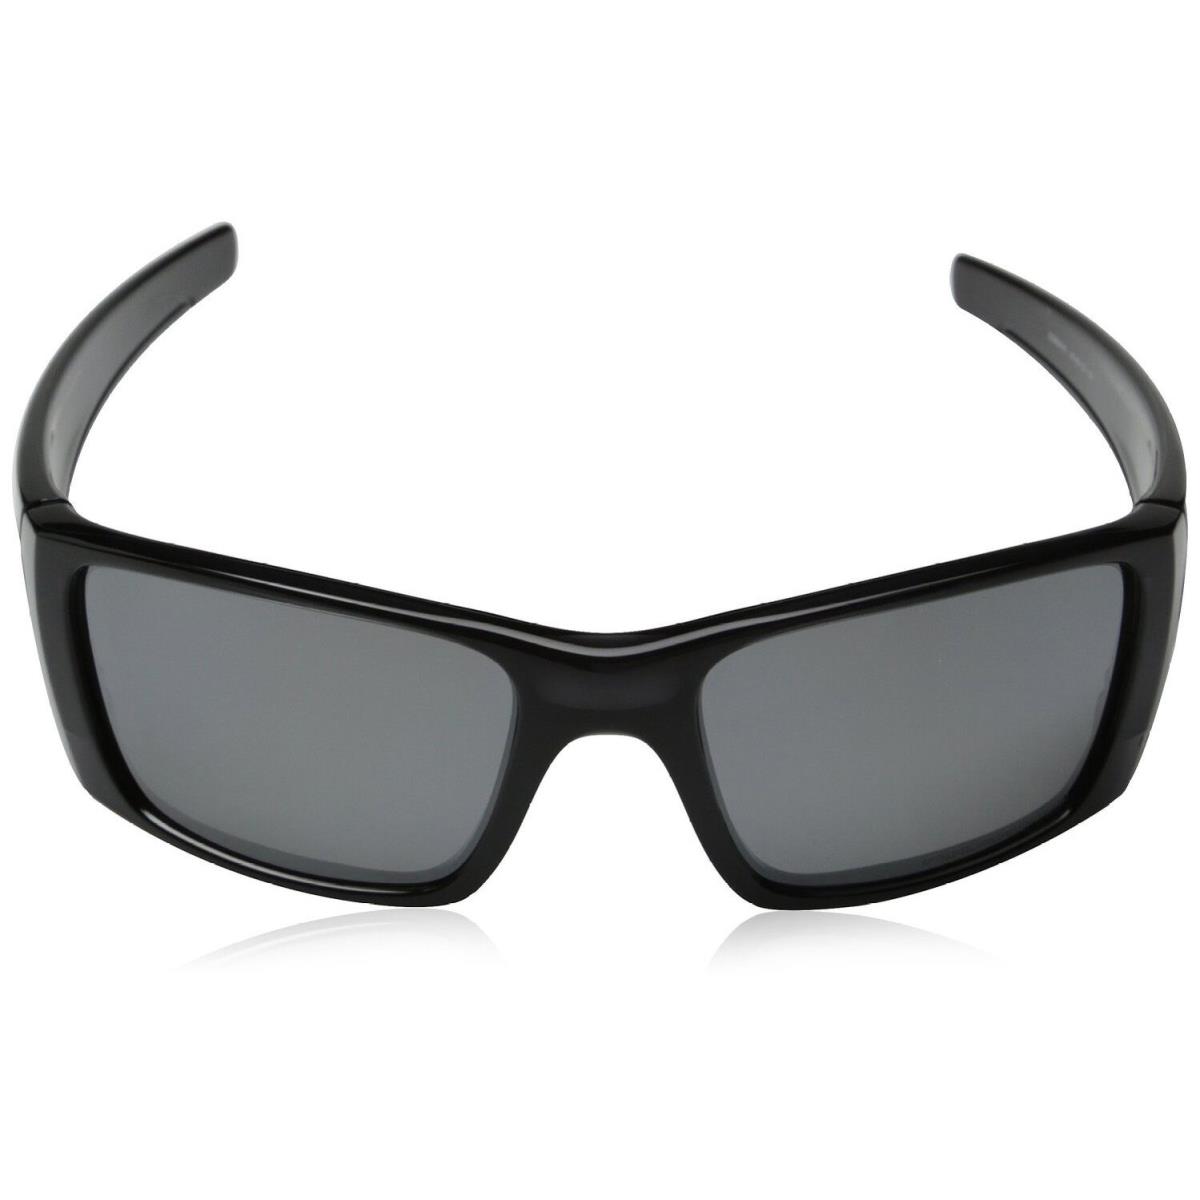 Oakley Fuel Cell Polarized Iridium Sunglasses Polished Black Ink Frame Lenses - Frame: Black, Lens: Black